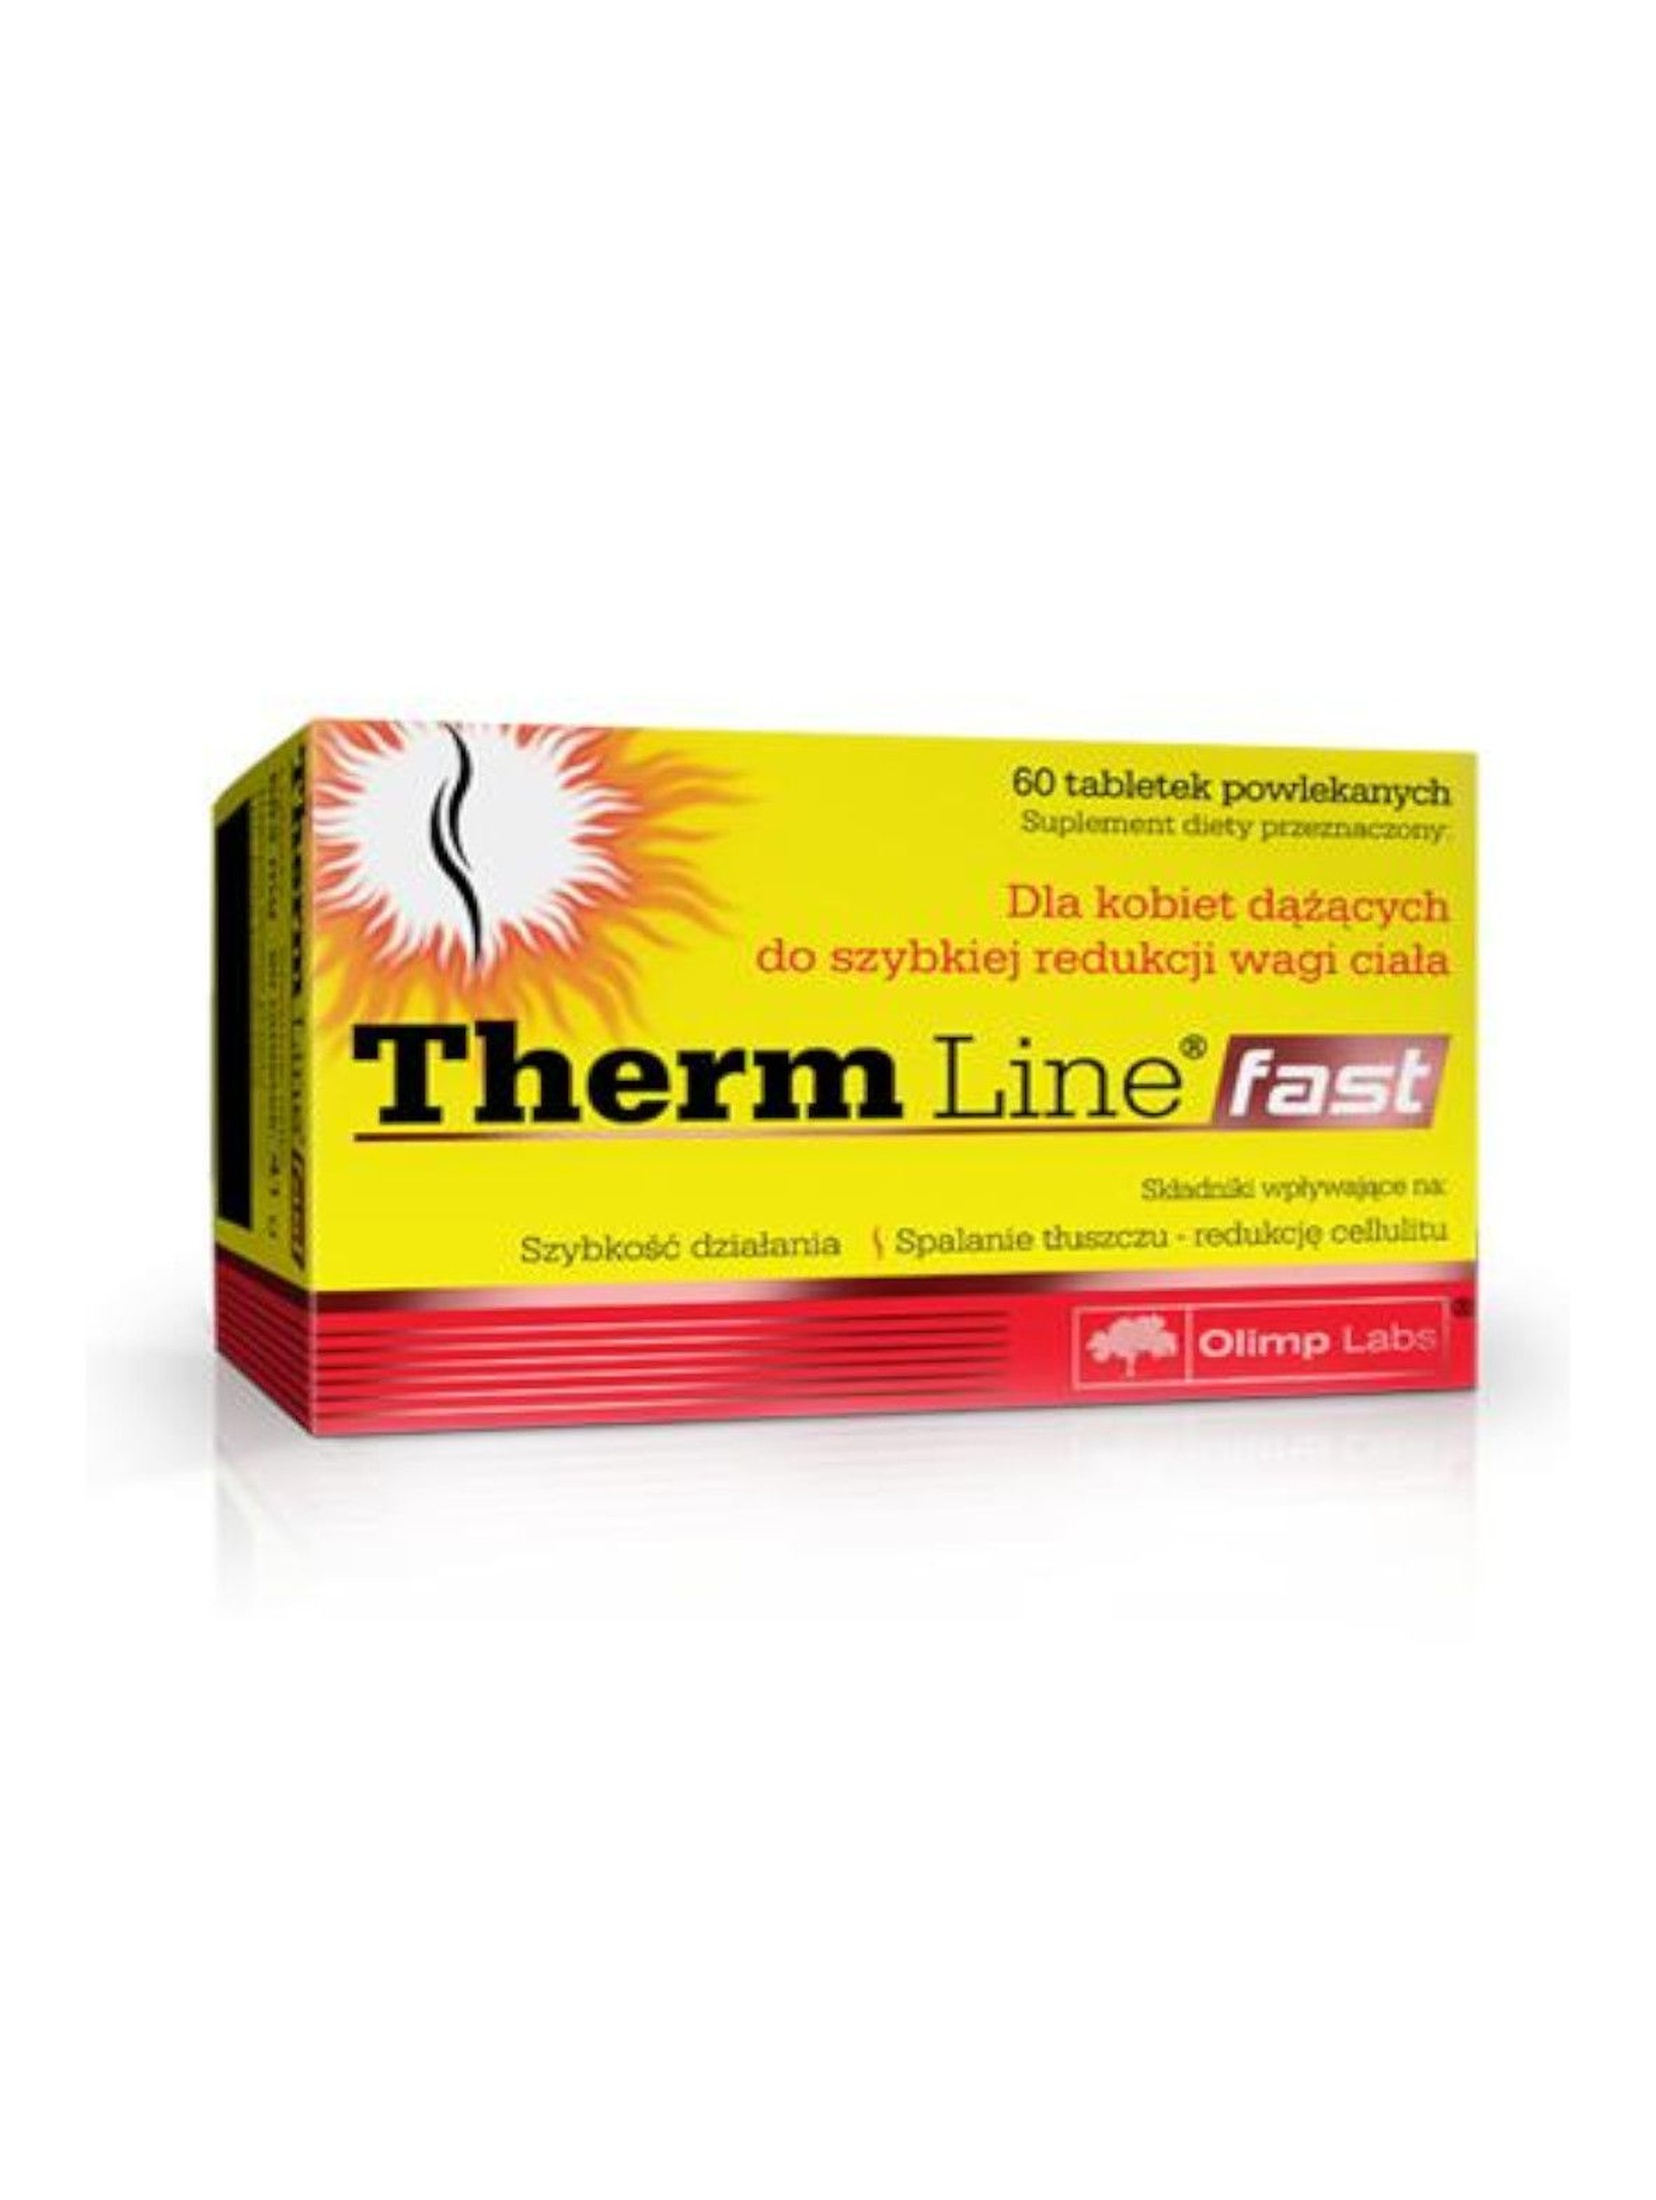 Therm Line fast - 60 tabletek